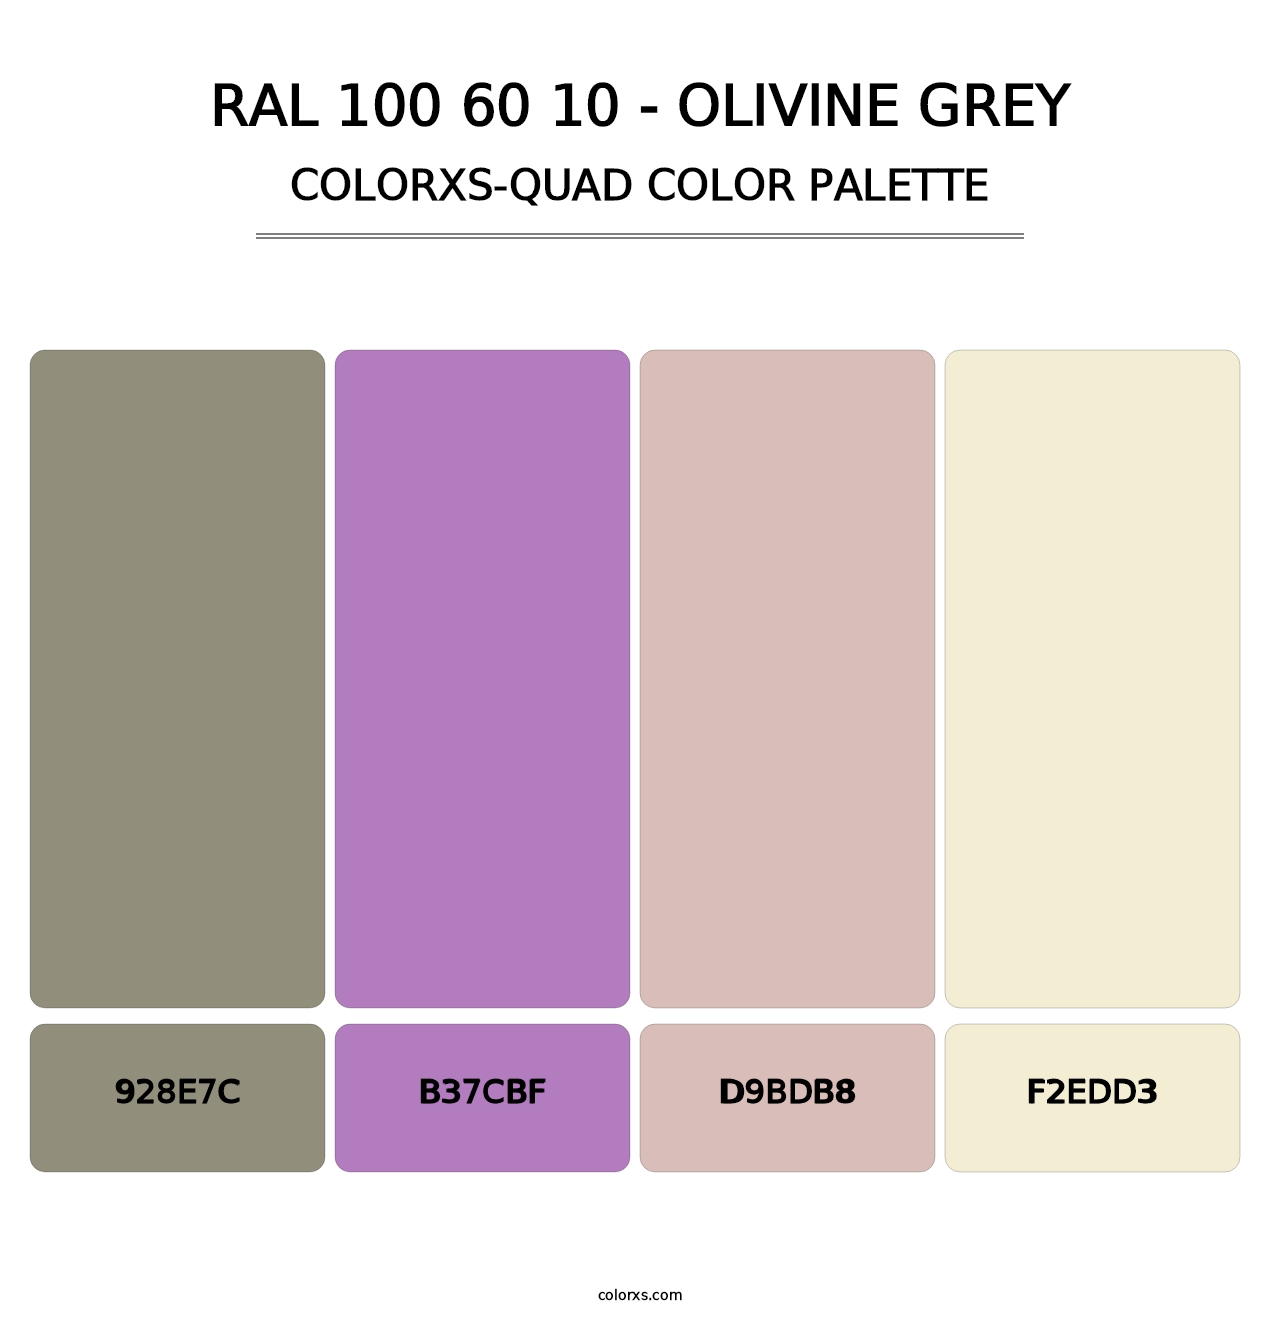 RAL 100 60 10 - Olivine Grey - Colorxs Quad Palette